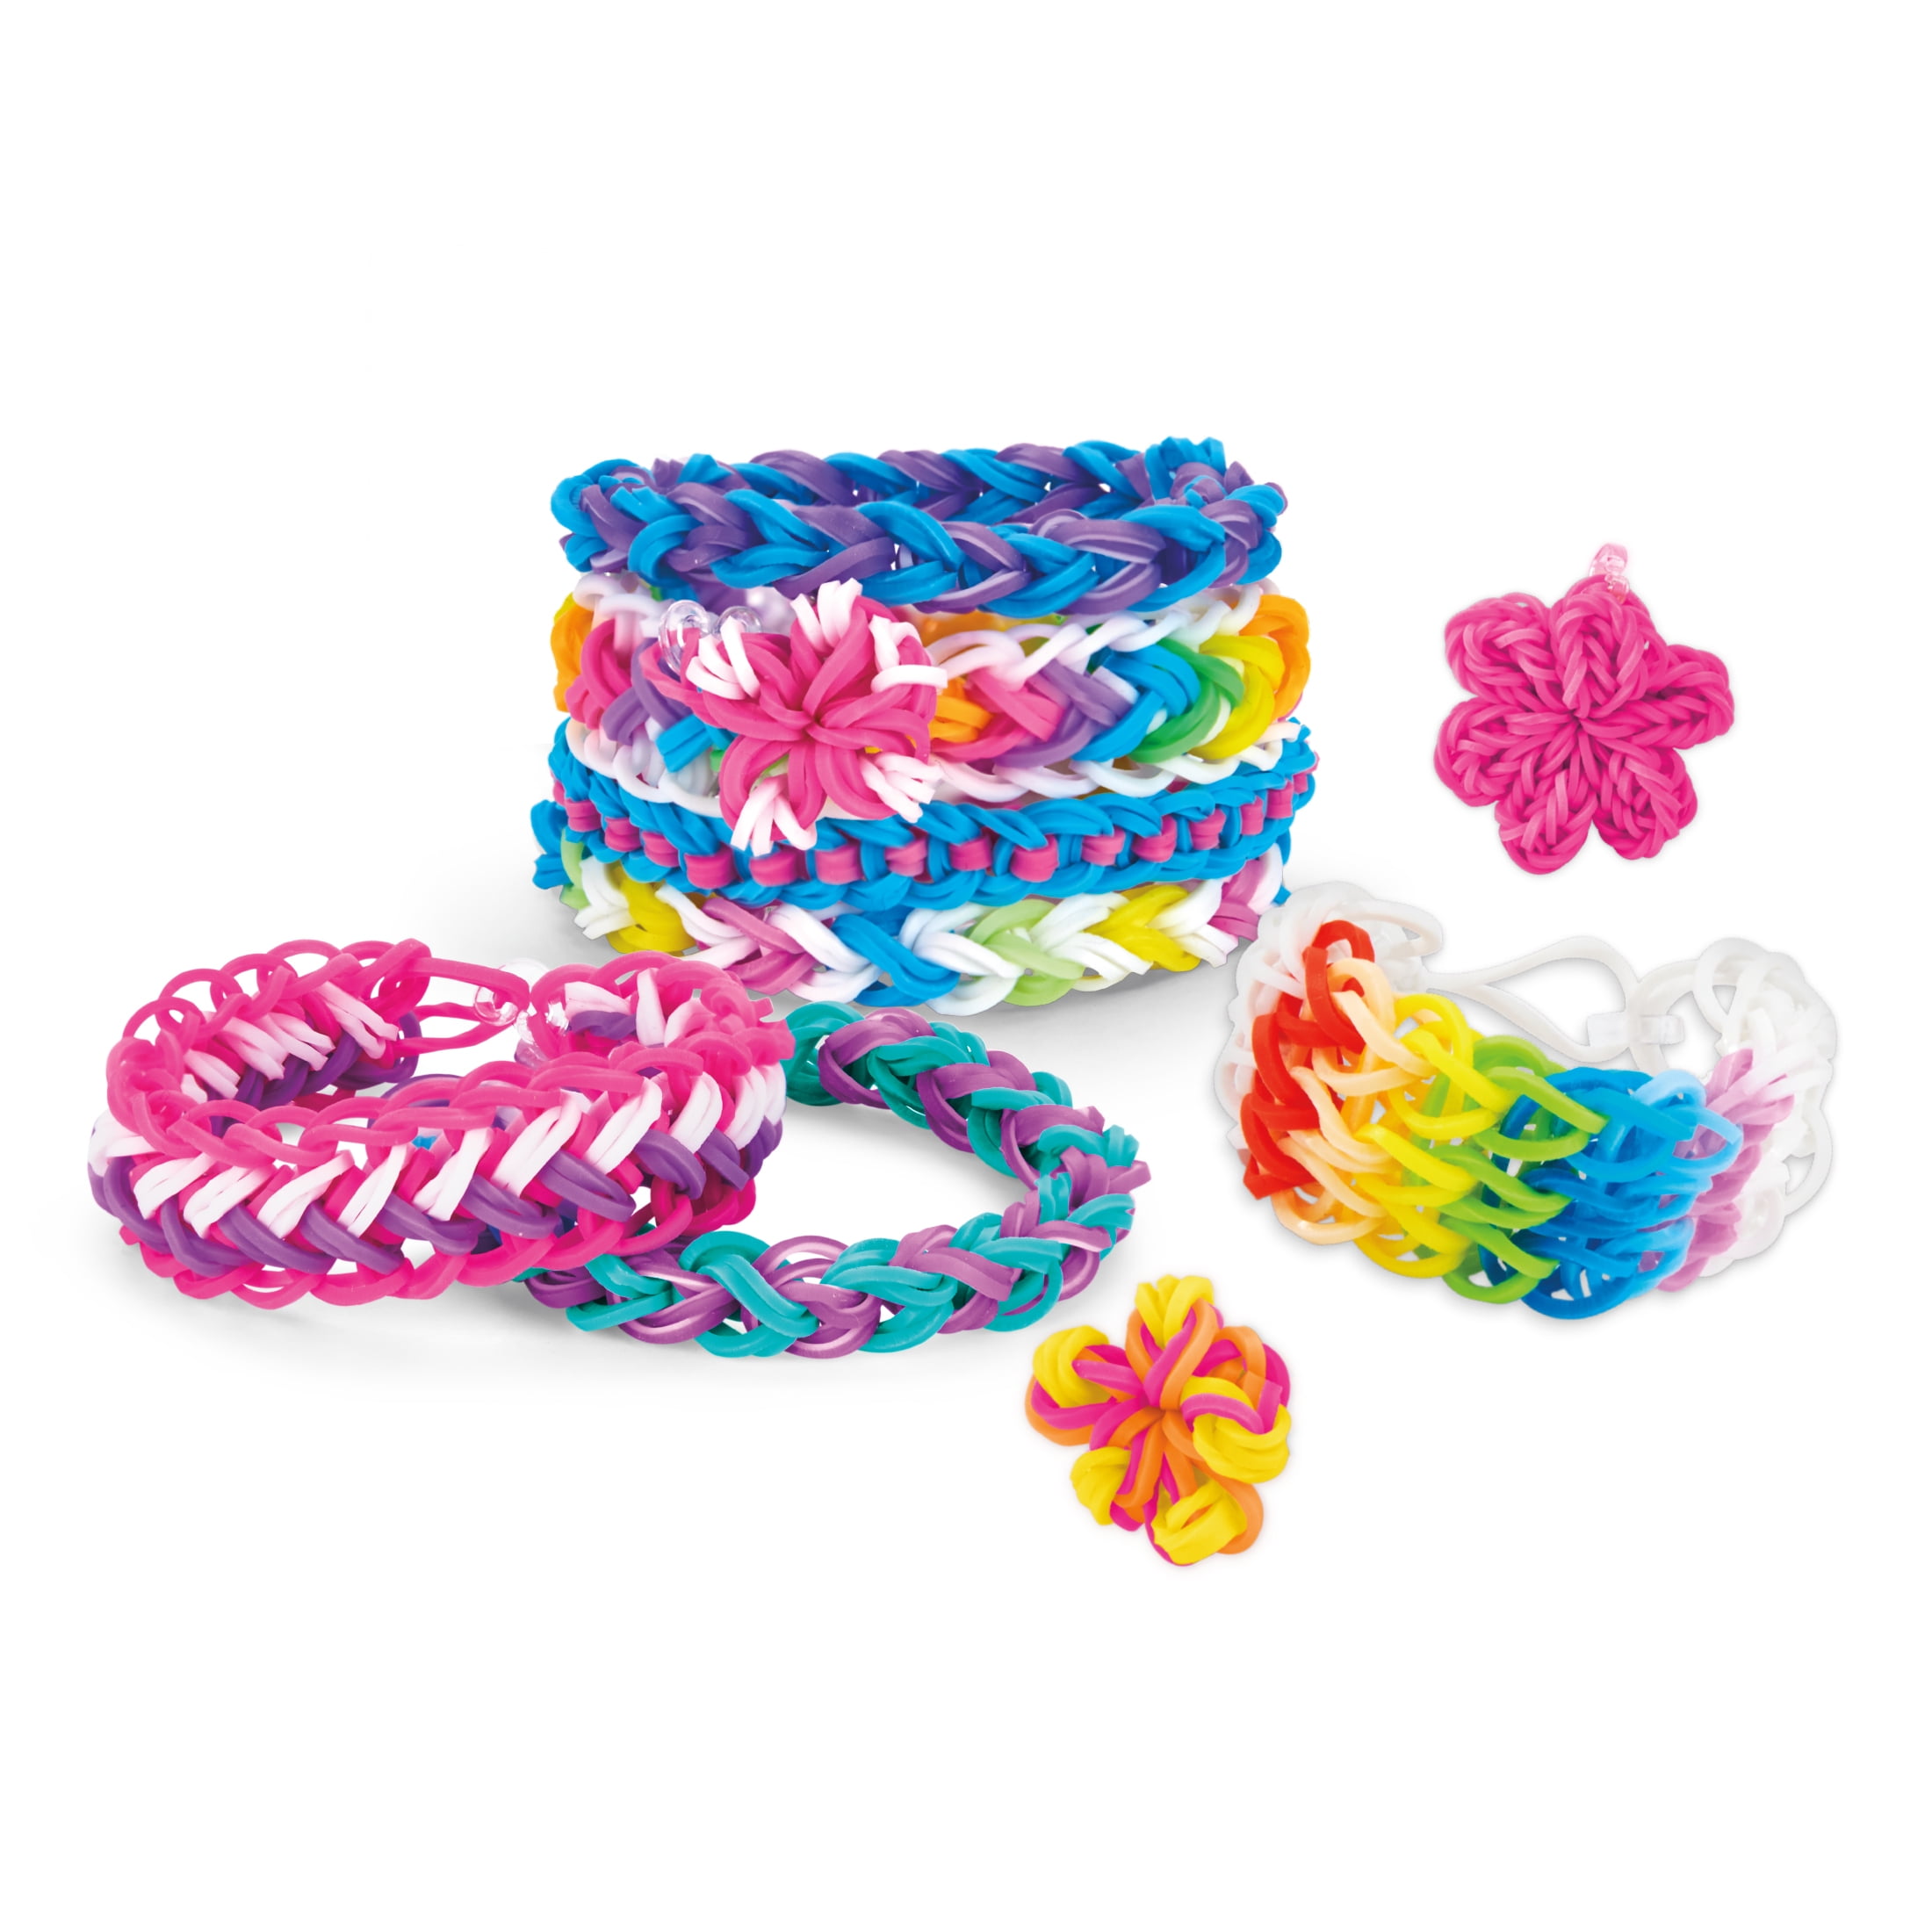 Cra-z Art Cra-z-loom Unicorn And Neon Rubber Band Bracelet-making Set, Arts & Crafts